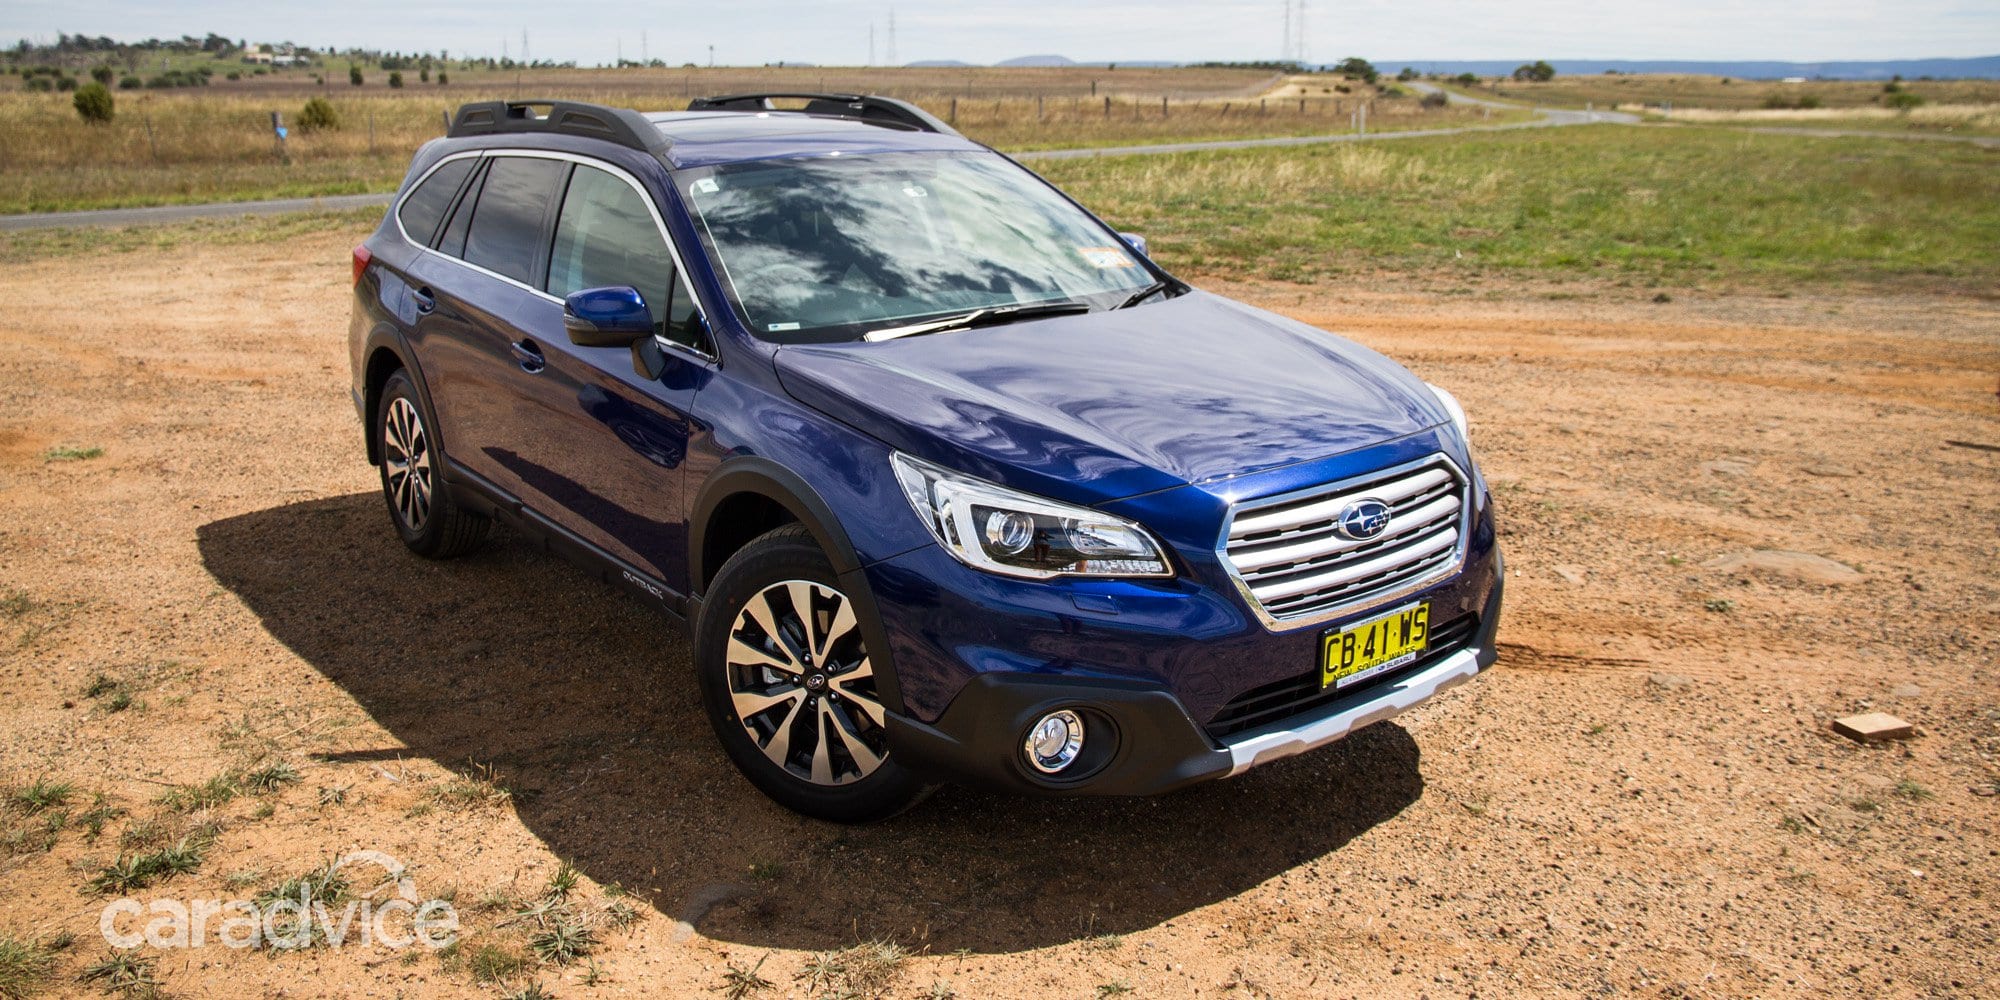 Ford Territory TS diesel v Subaru Outback 2.0D Premium